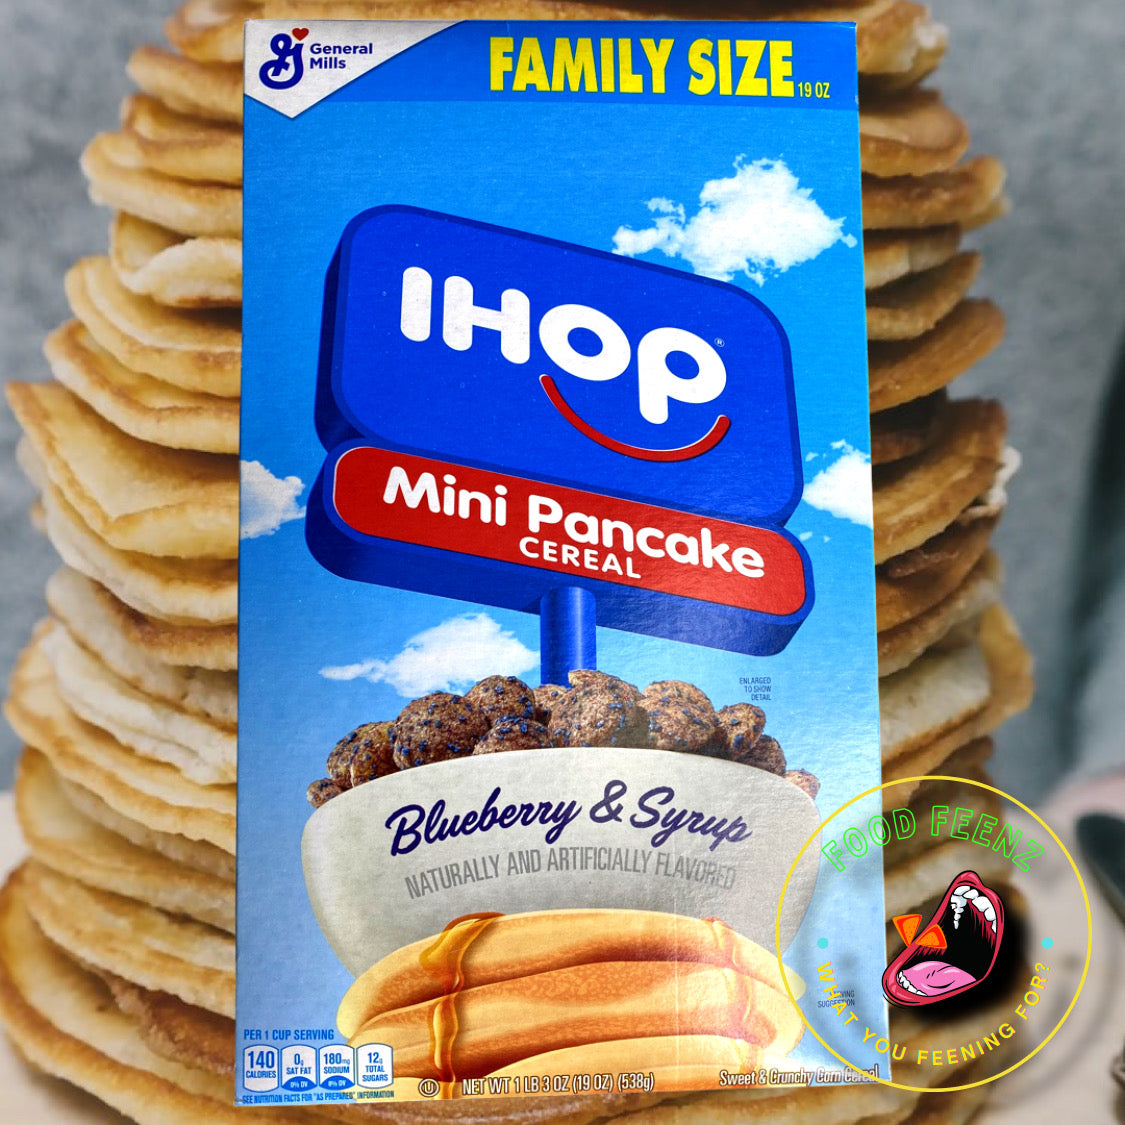 IHOP Mini Pancake Cereal